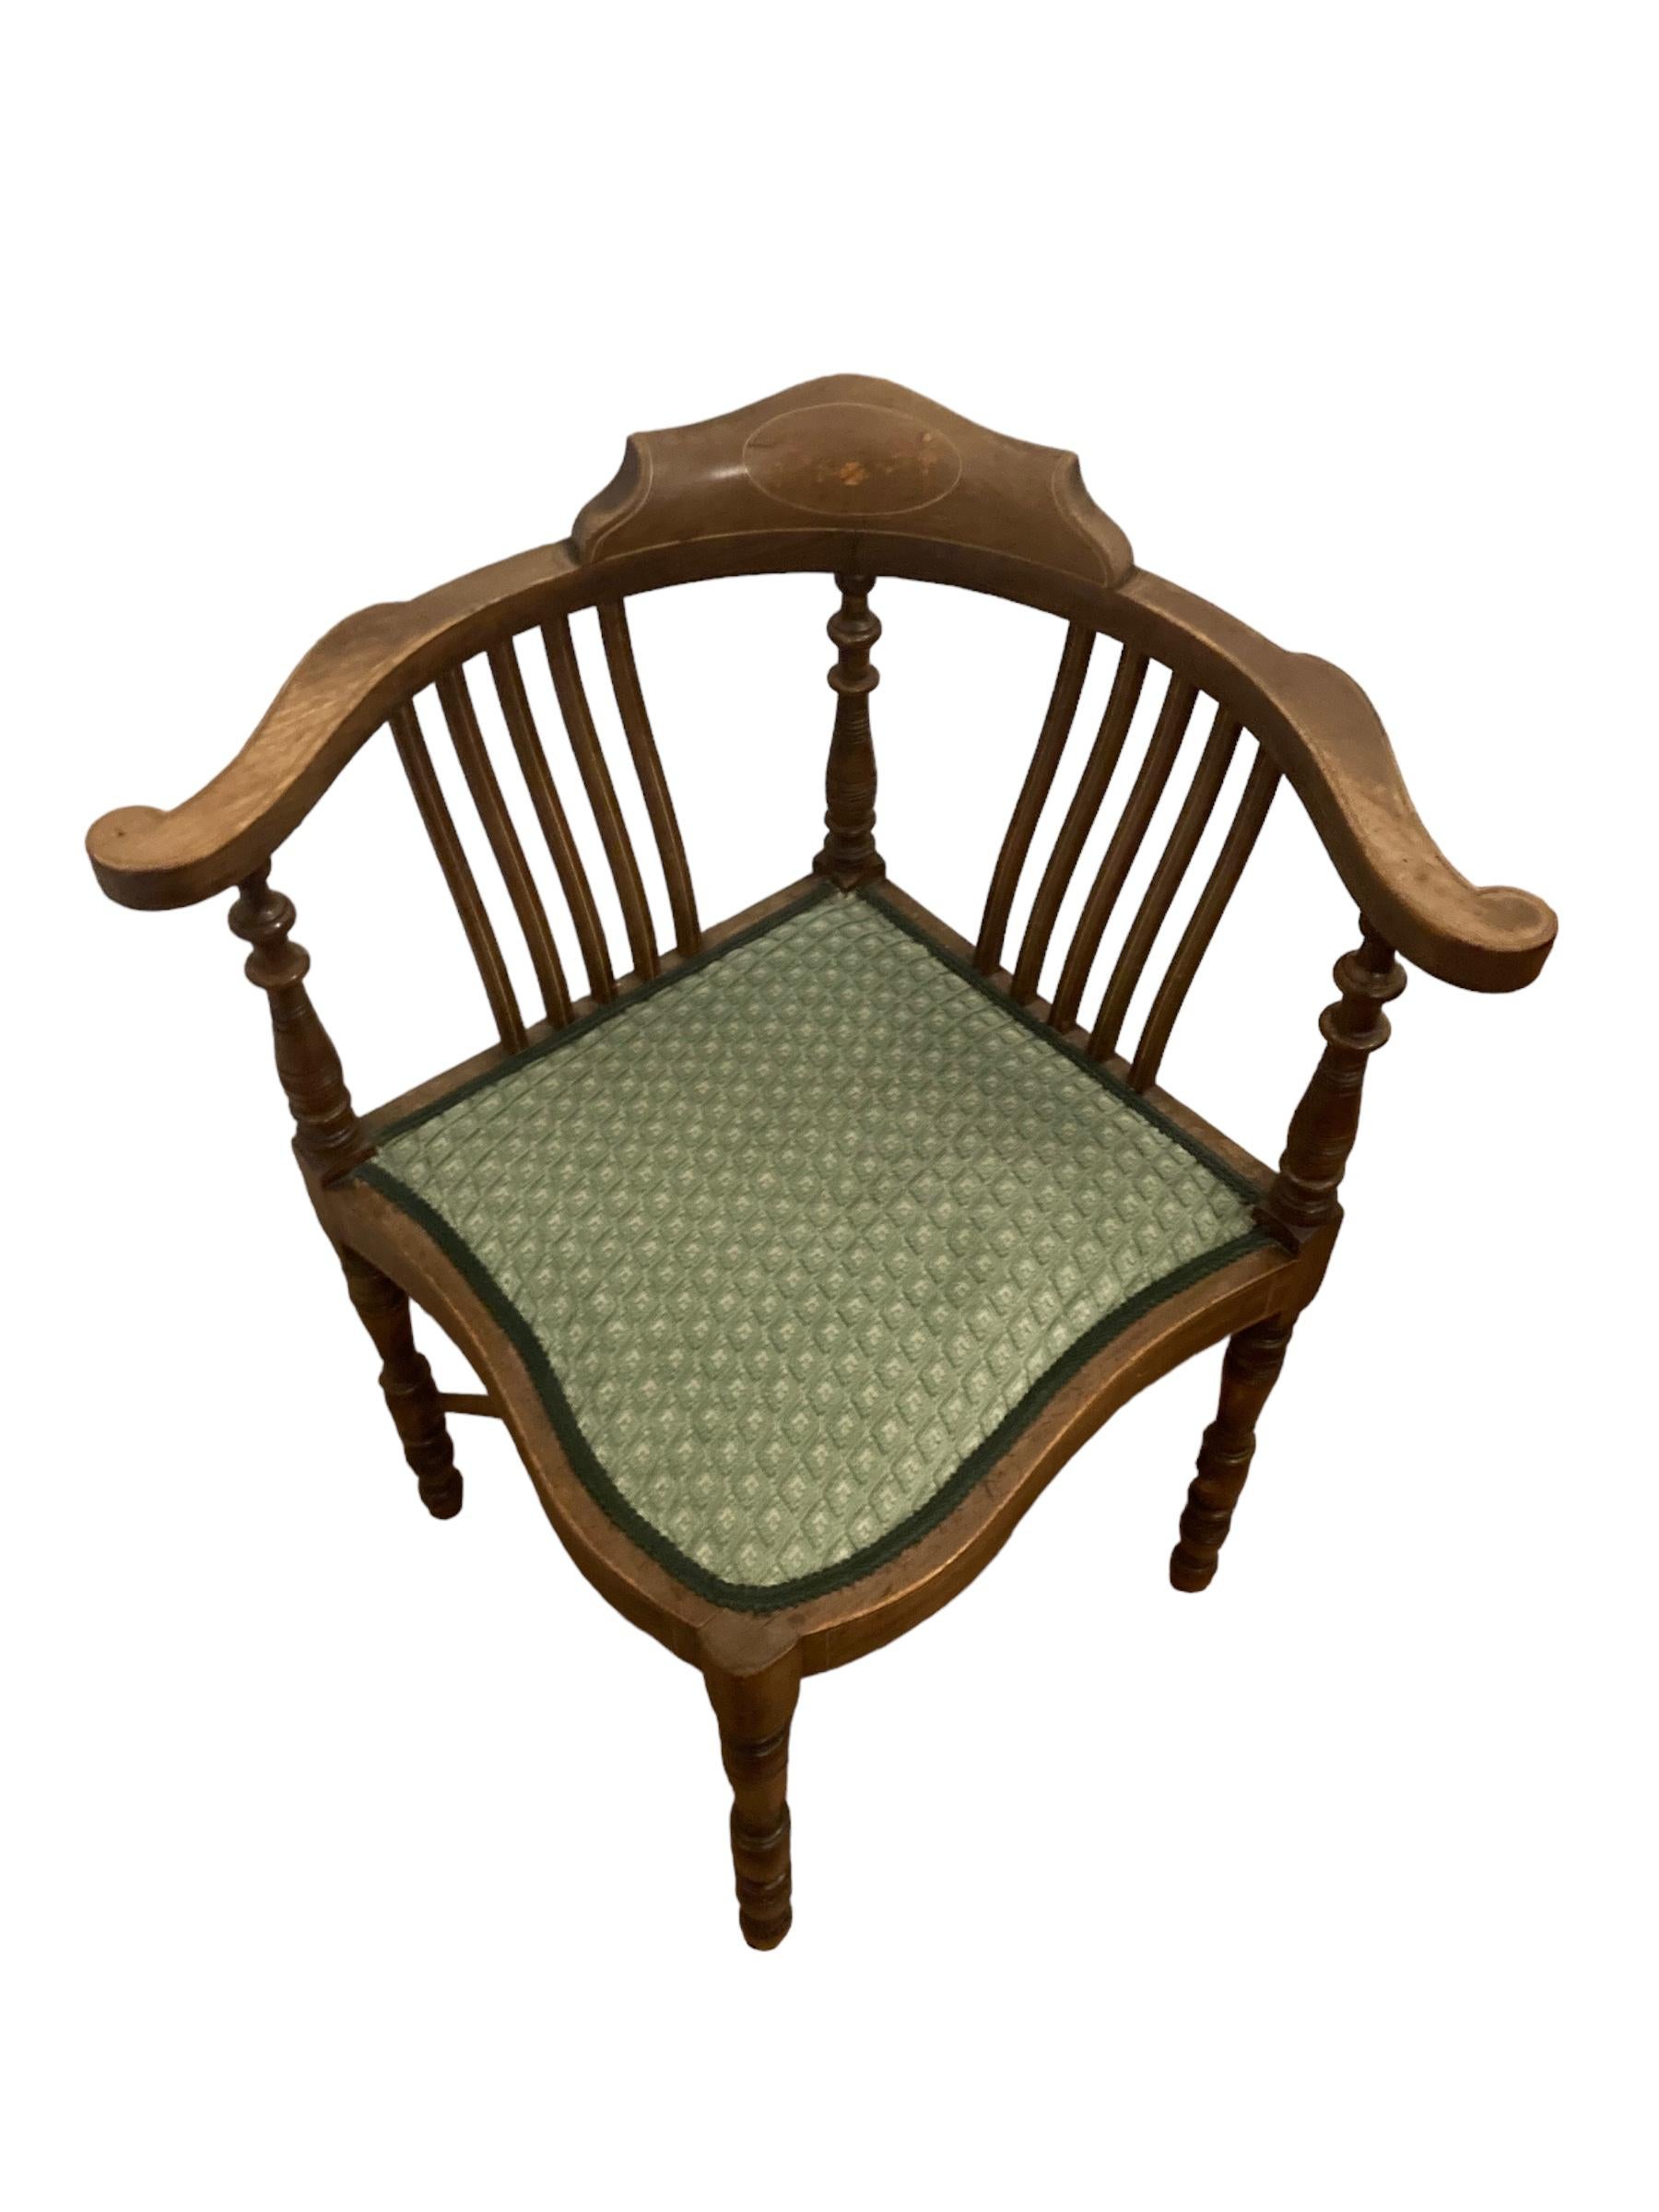 Edwardian Inlaid Mahogany Corner Chair 2